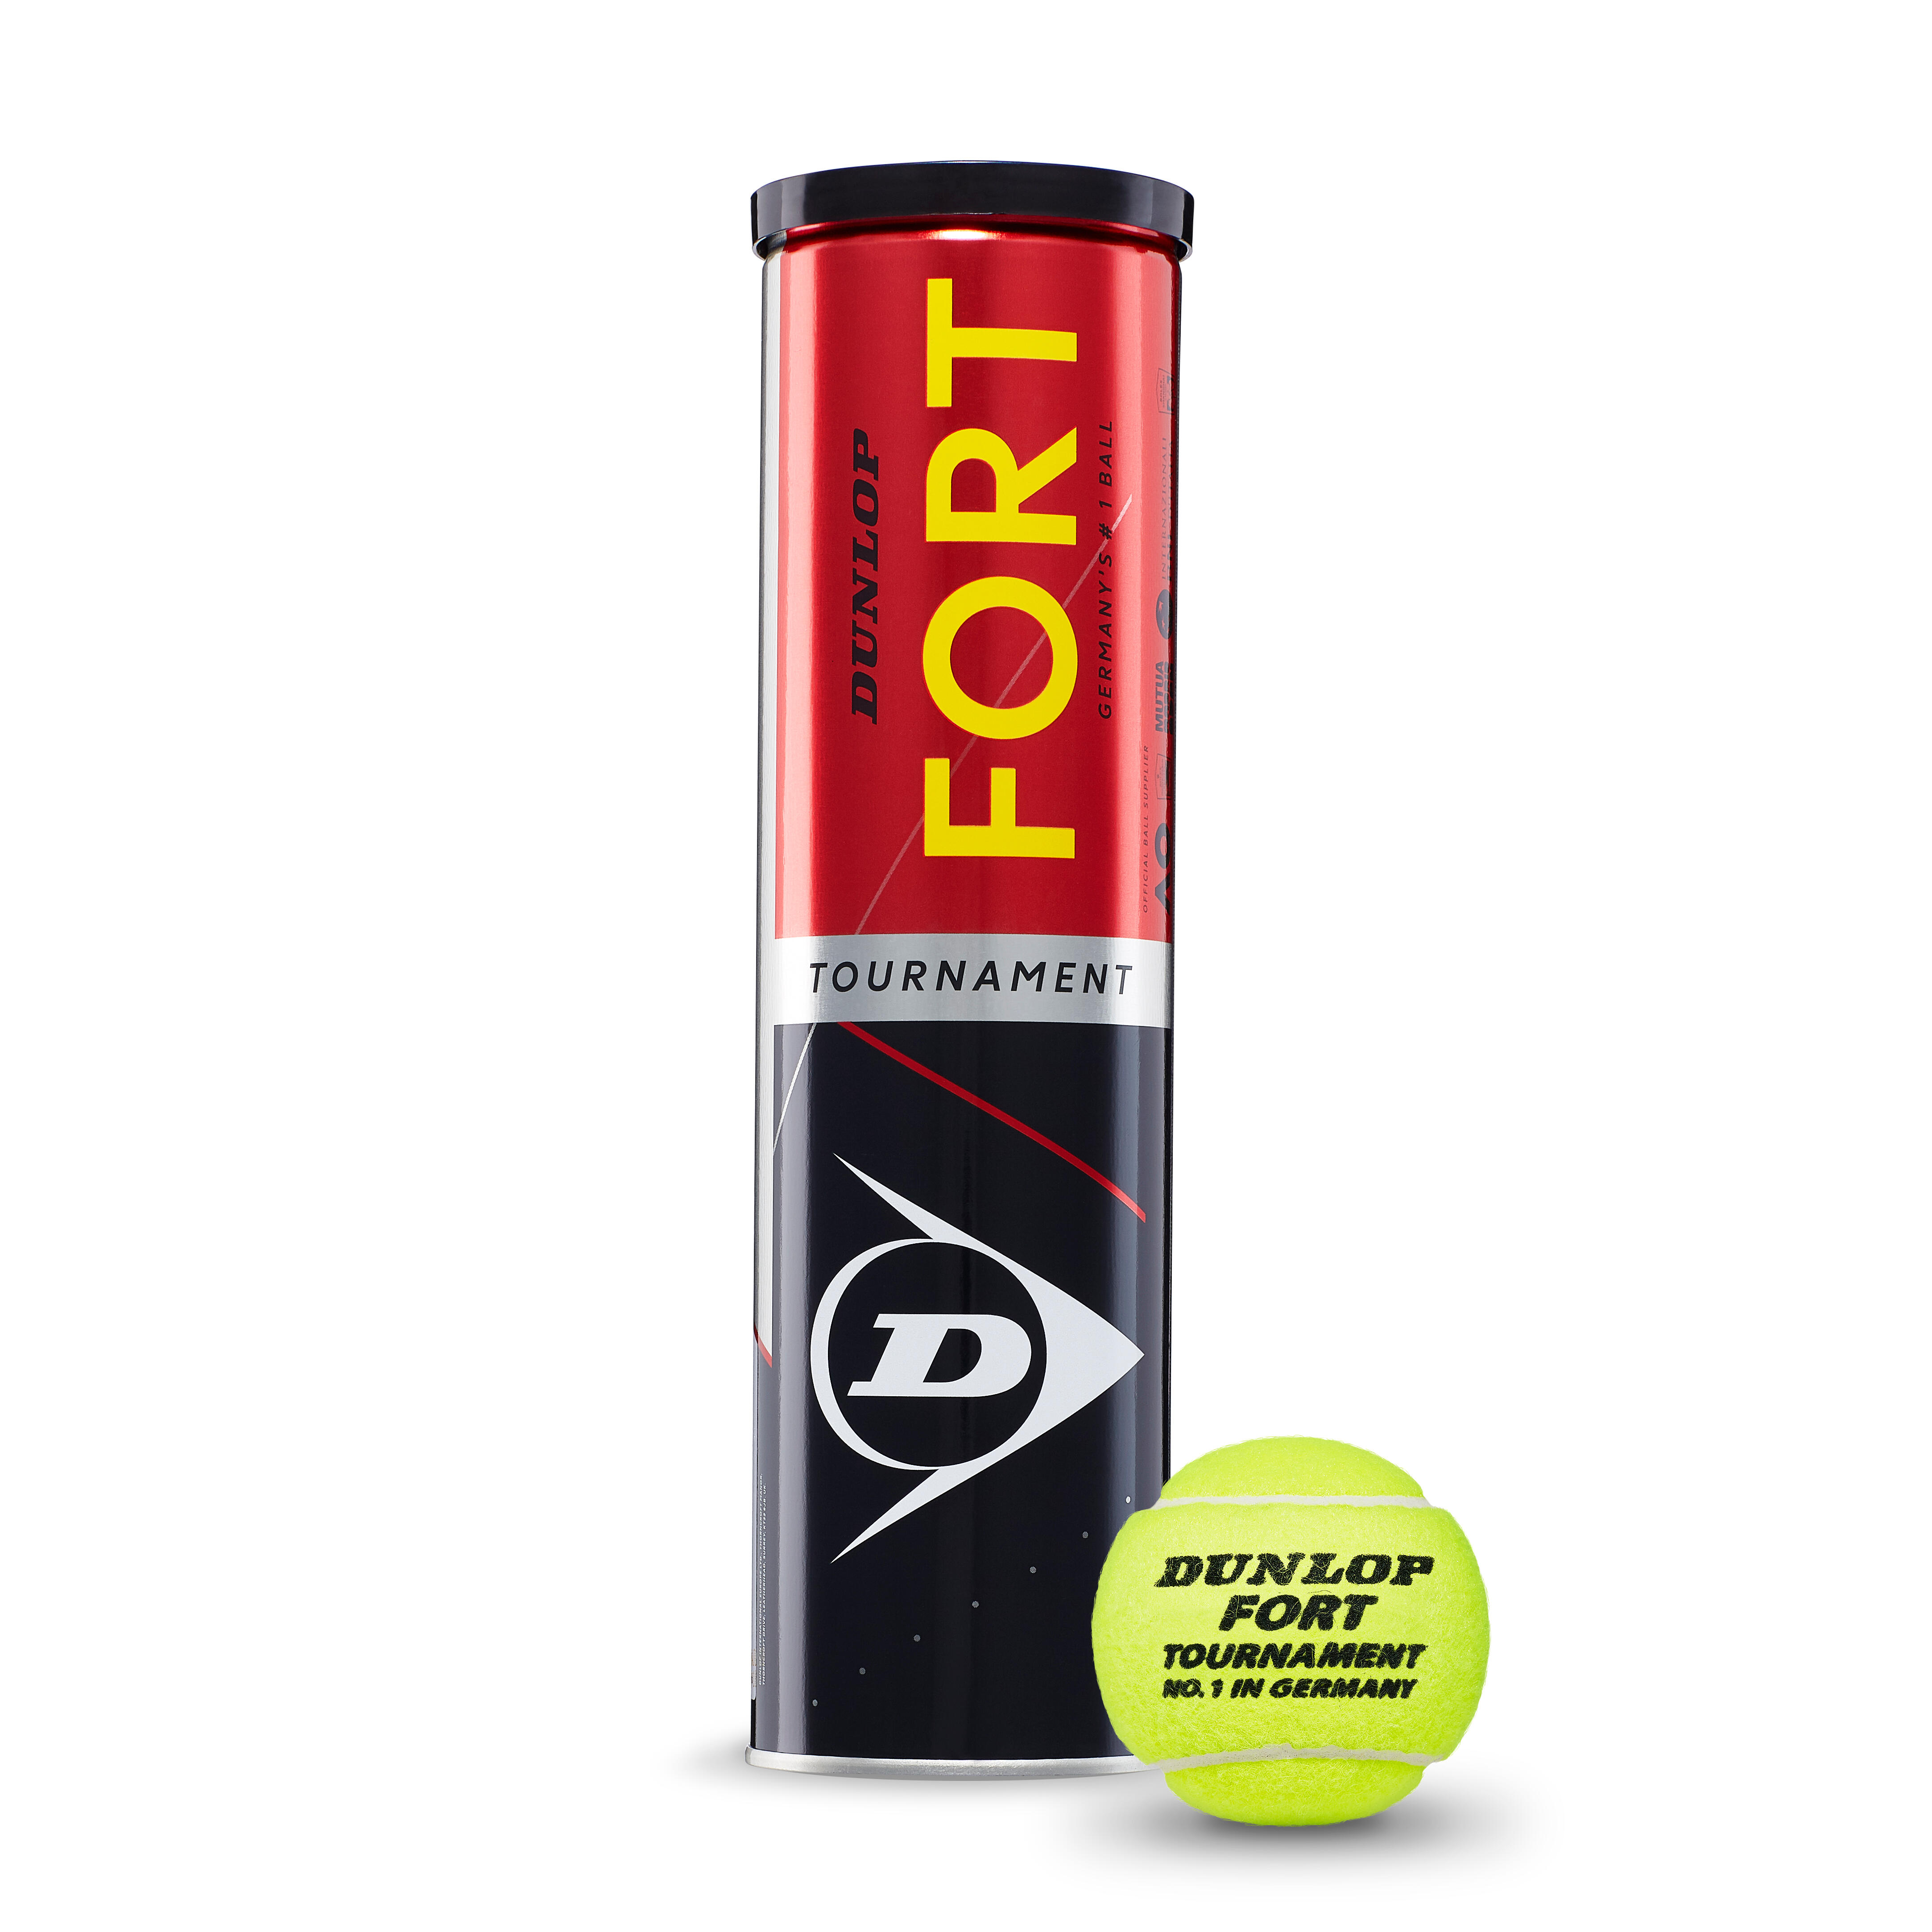 BTV 1.0 bei uns erhältlich* Marken-Tennisbälle Dunlop Pro Tour 4er Dose 